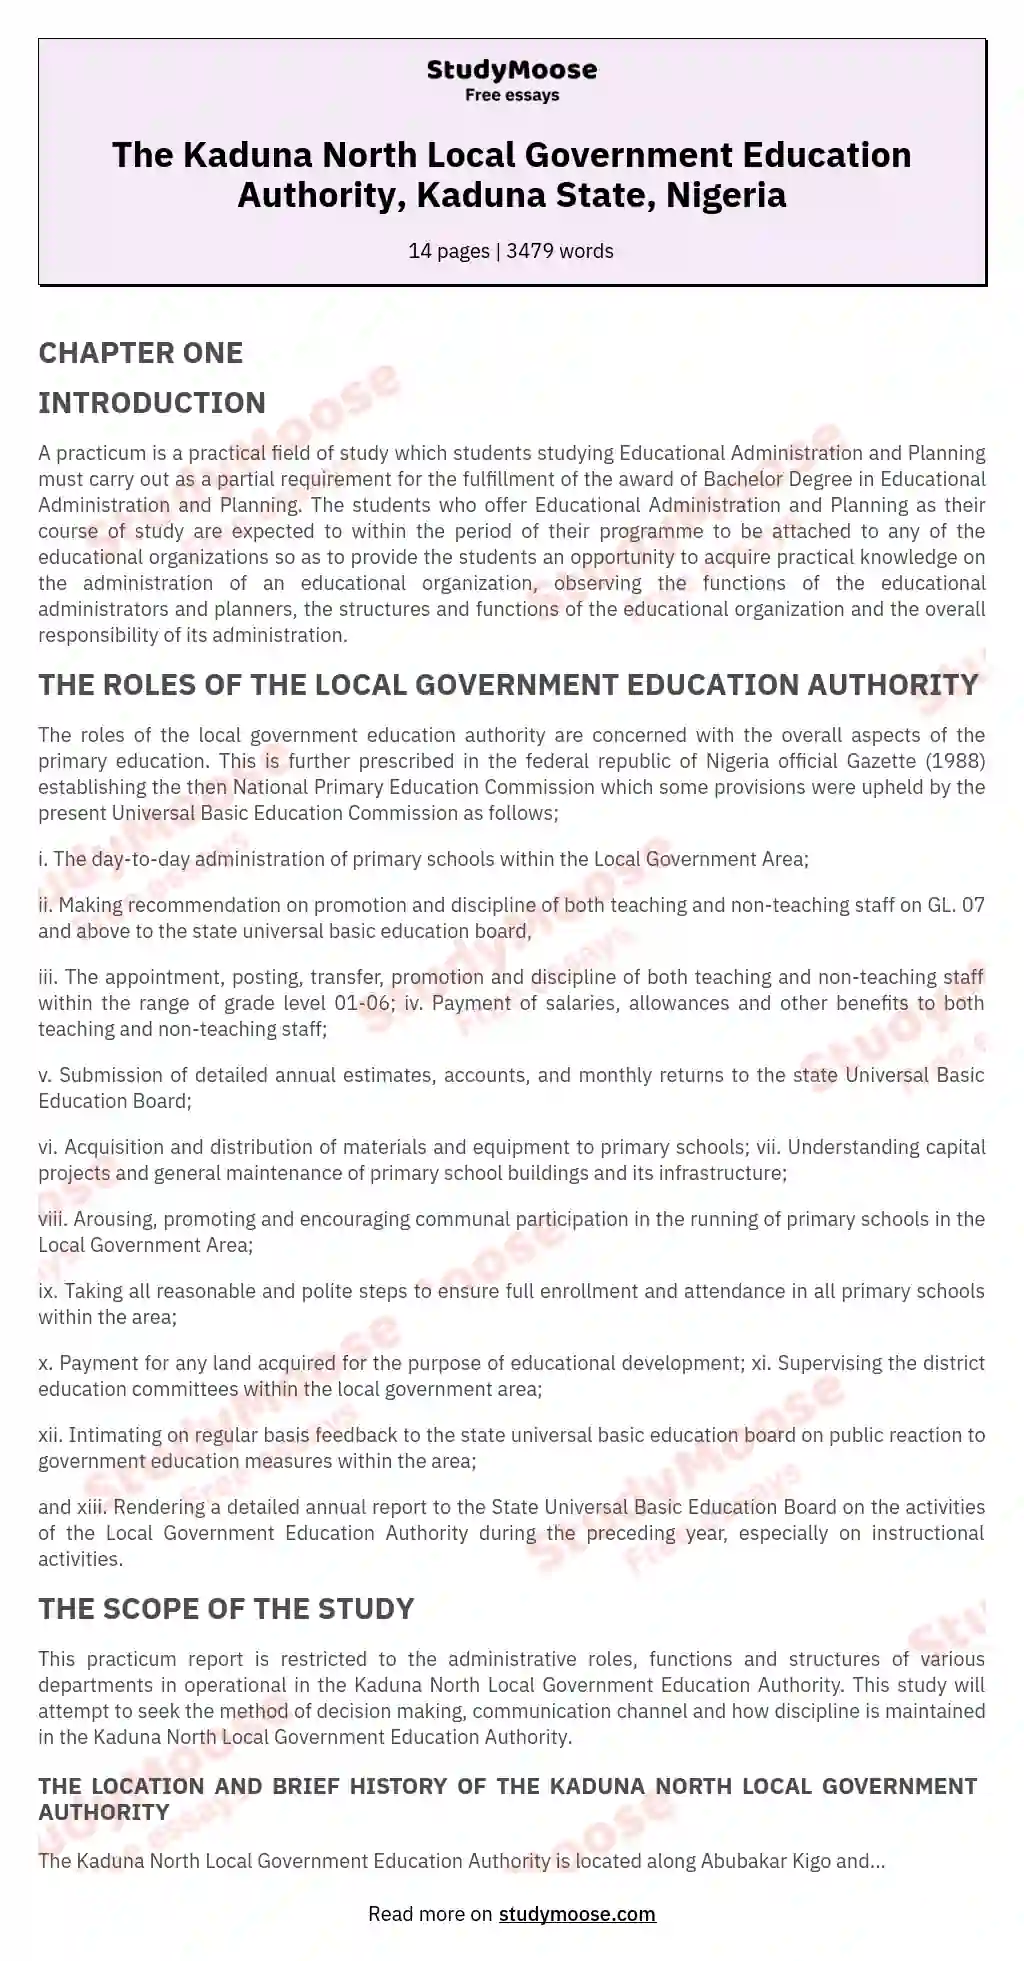 The Kaduna North Local Government Education Authority, Kaduna State, Nigeria essay